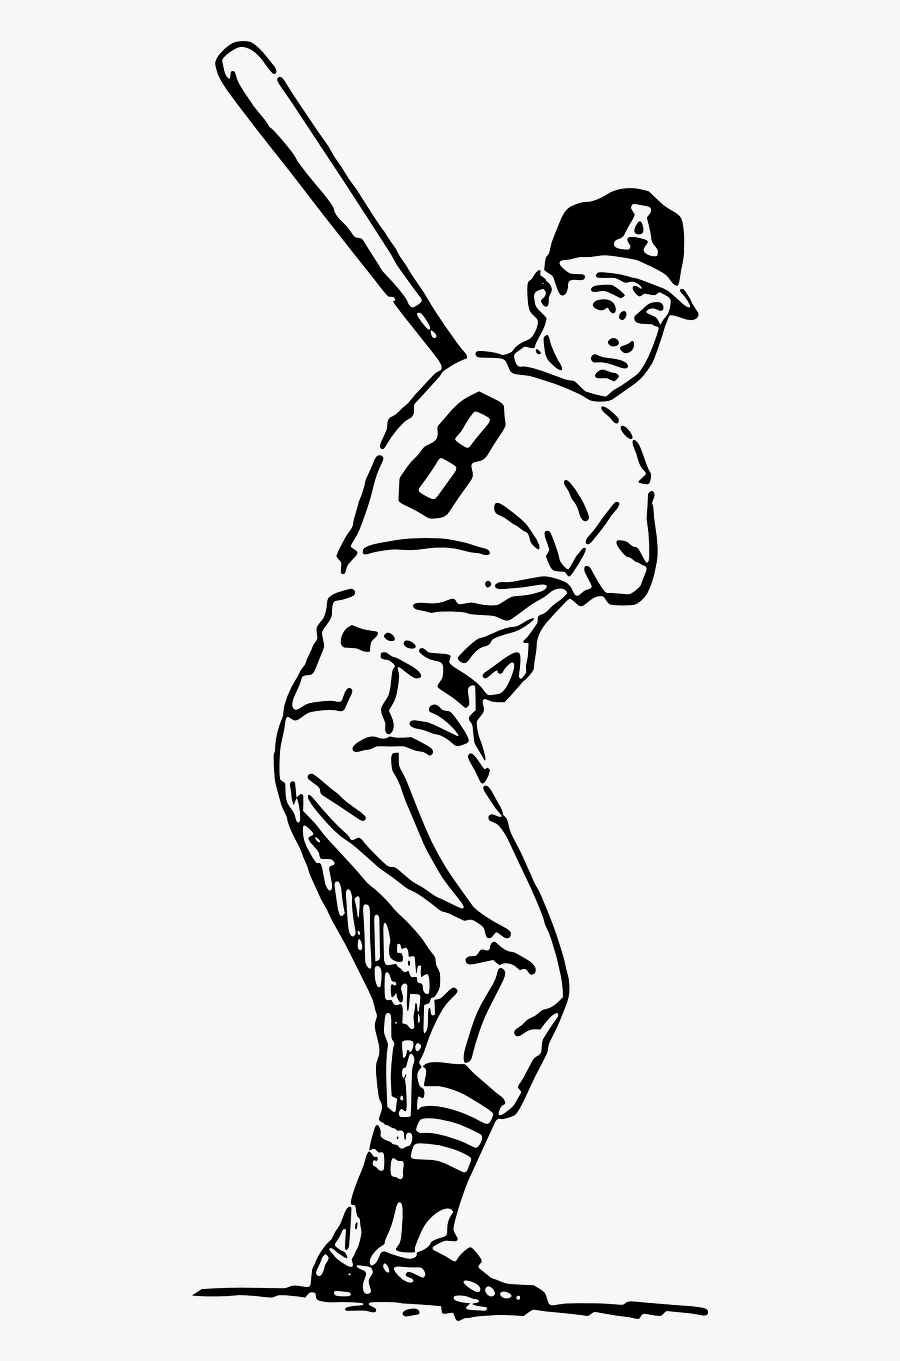 Baseball Player Batter - Baseball Player Clipart Black And White, Transparent Clipart